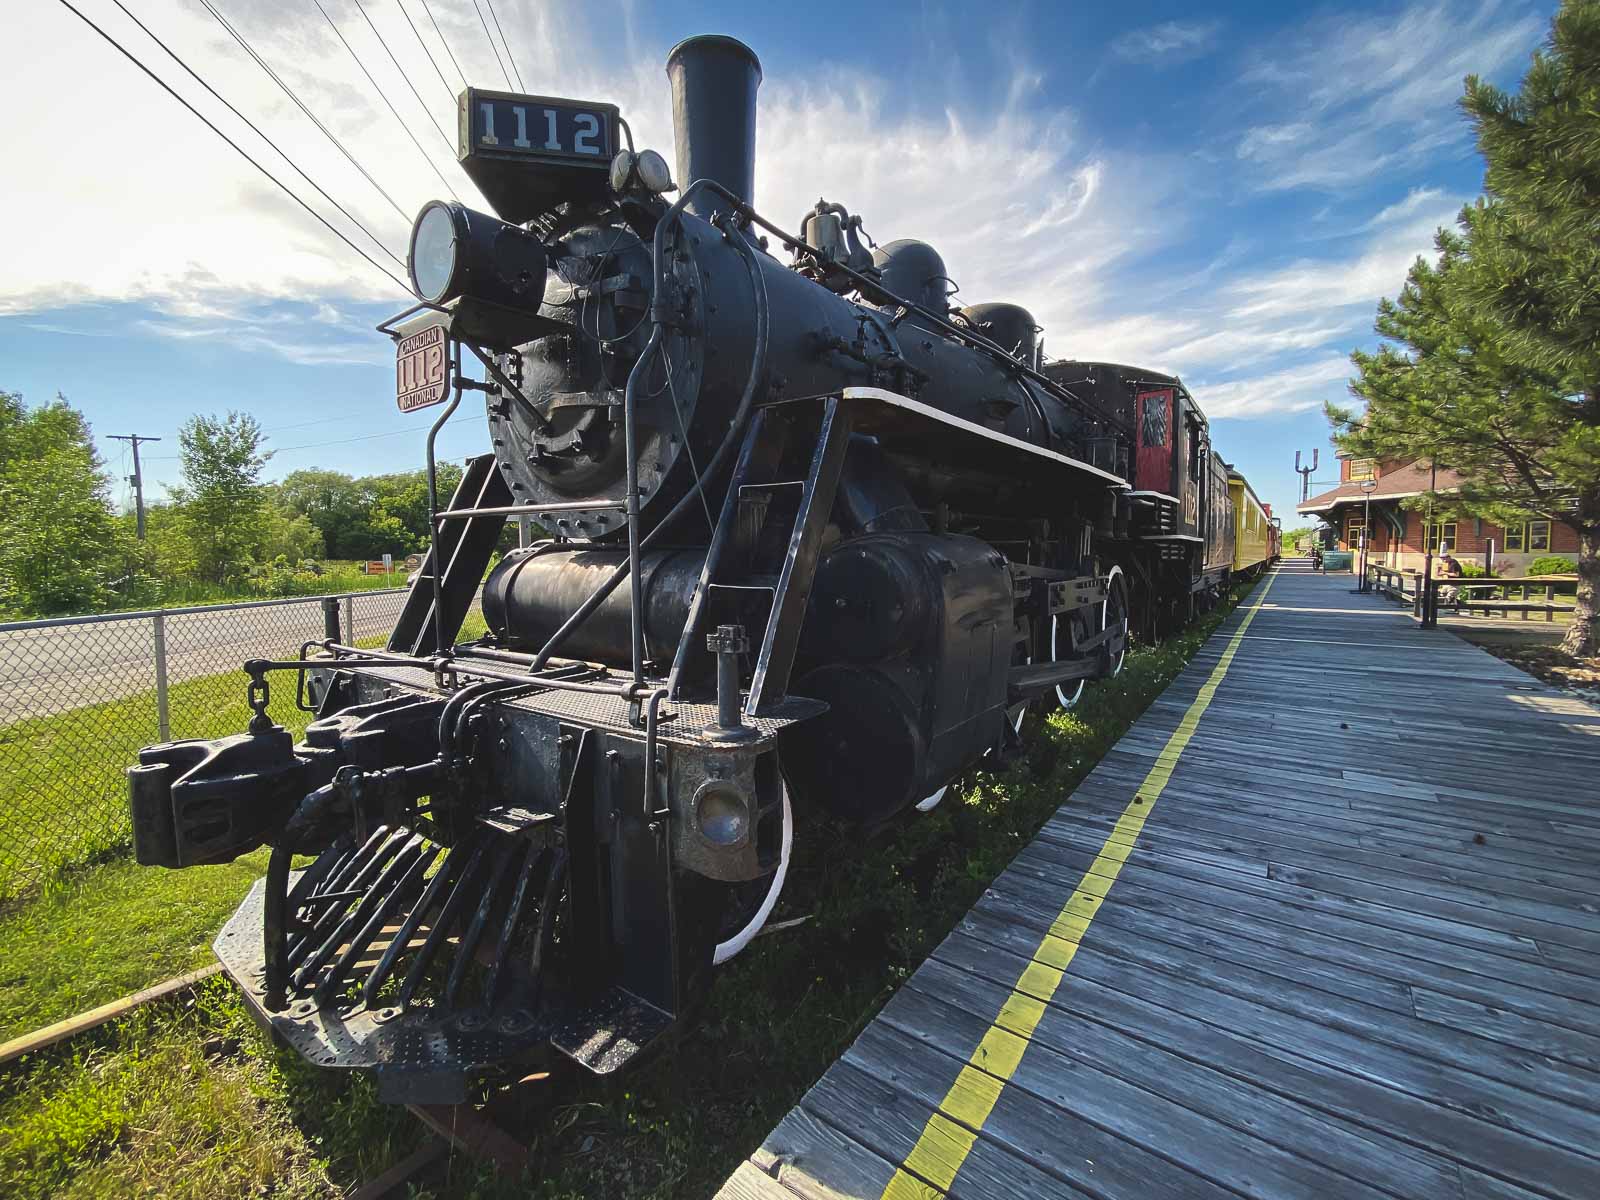 Railway Musem in Smith Falls Ontario